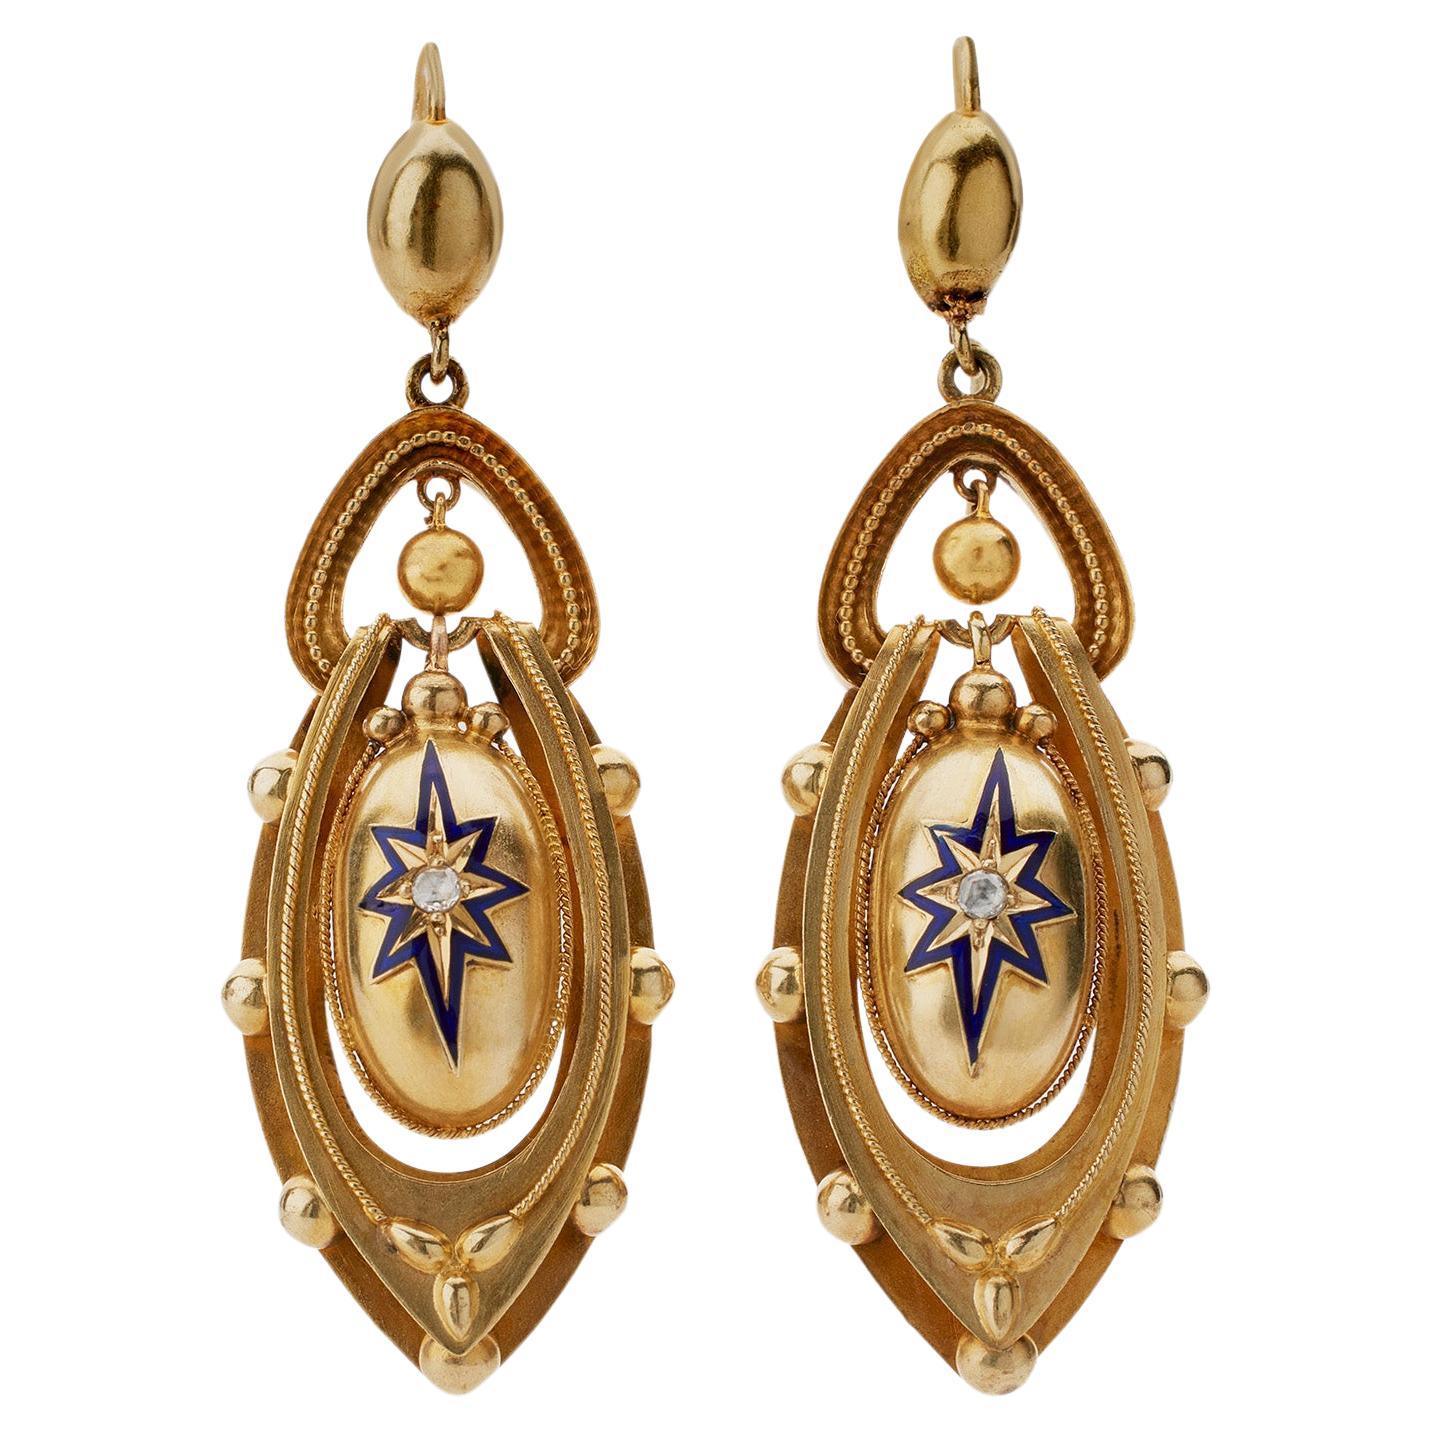 1870s Gold and Enamel Star Pendant Earrings For Sale